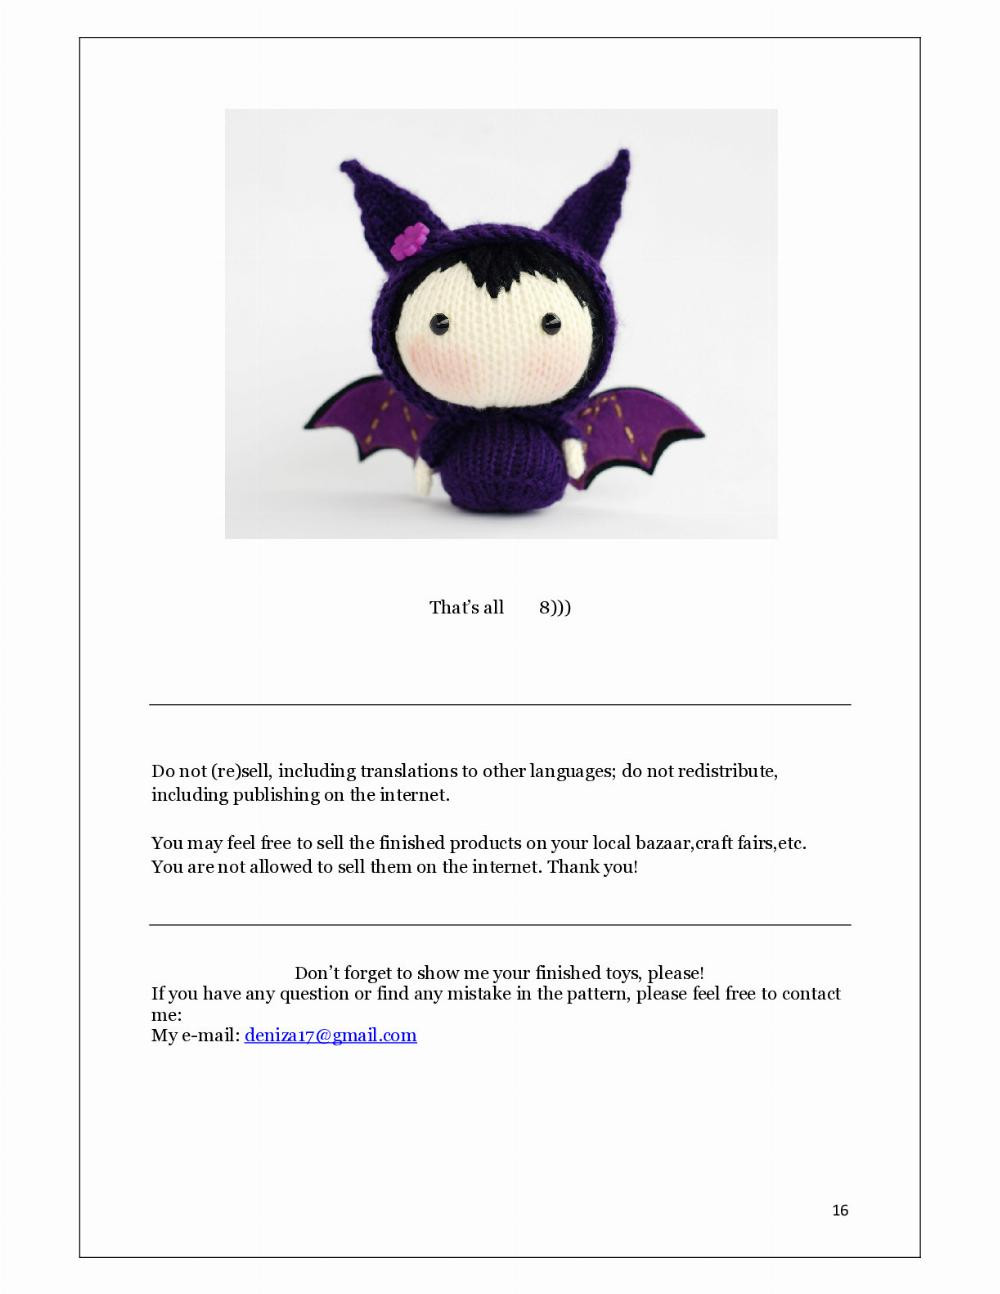 Halloween Bat Doll. Knitting pattern (knitted round)